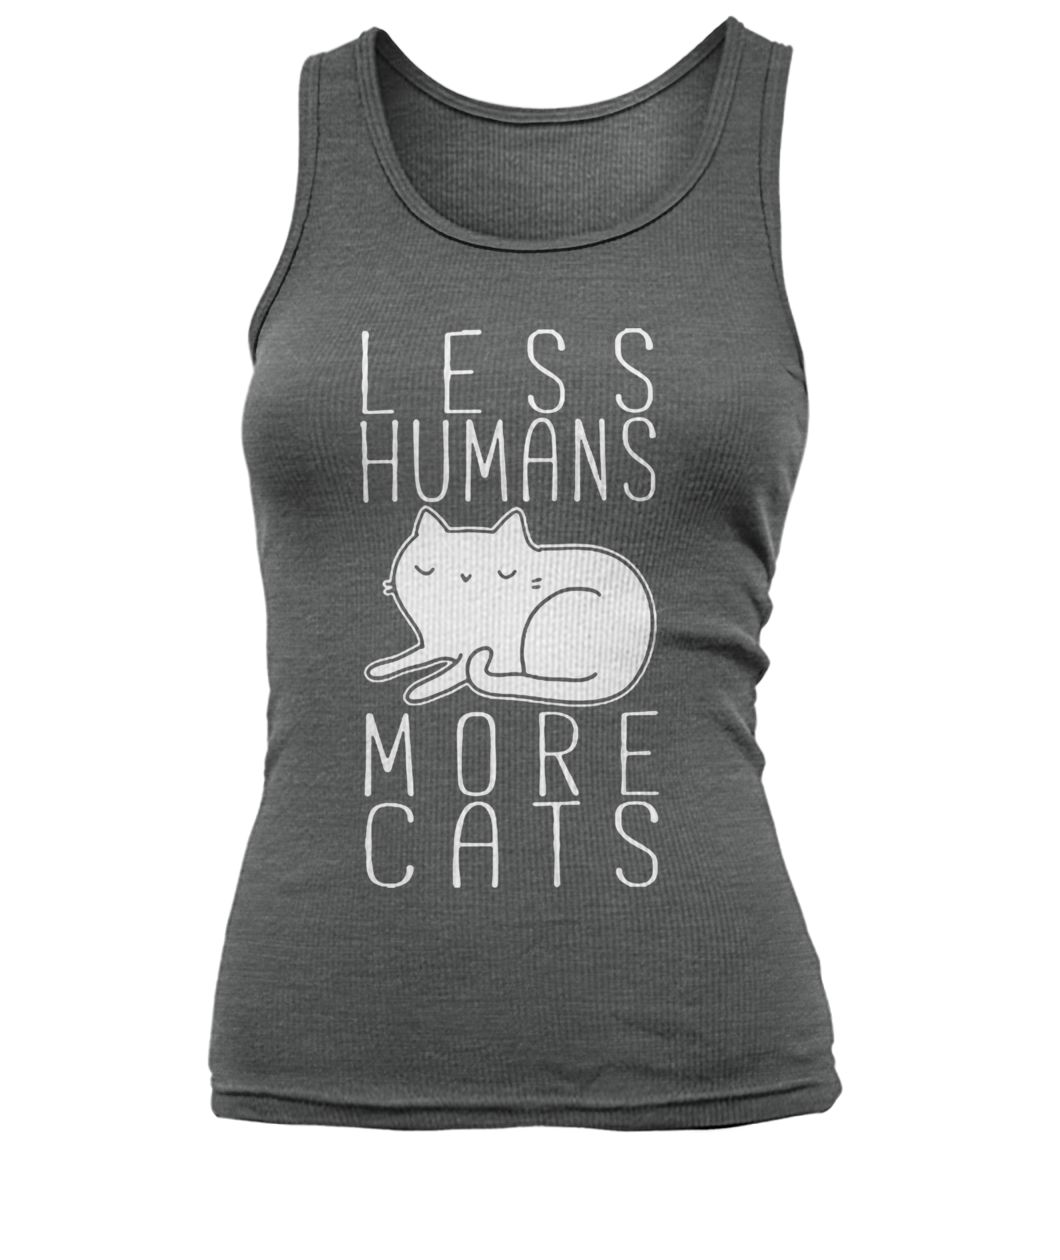 Less humans more cats women's tank top